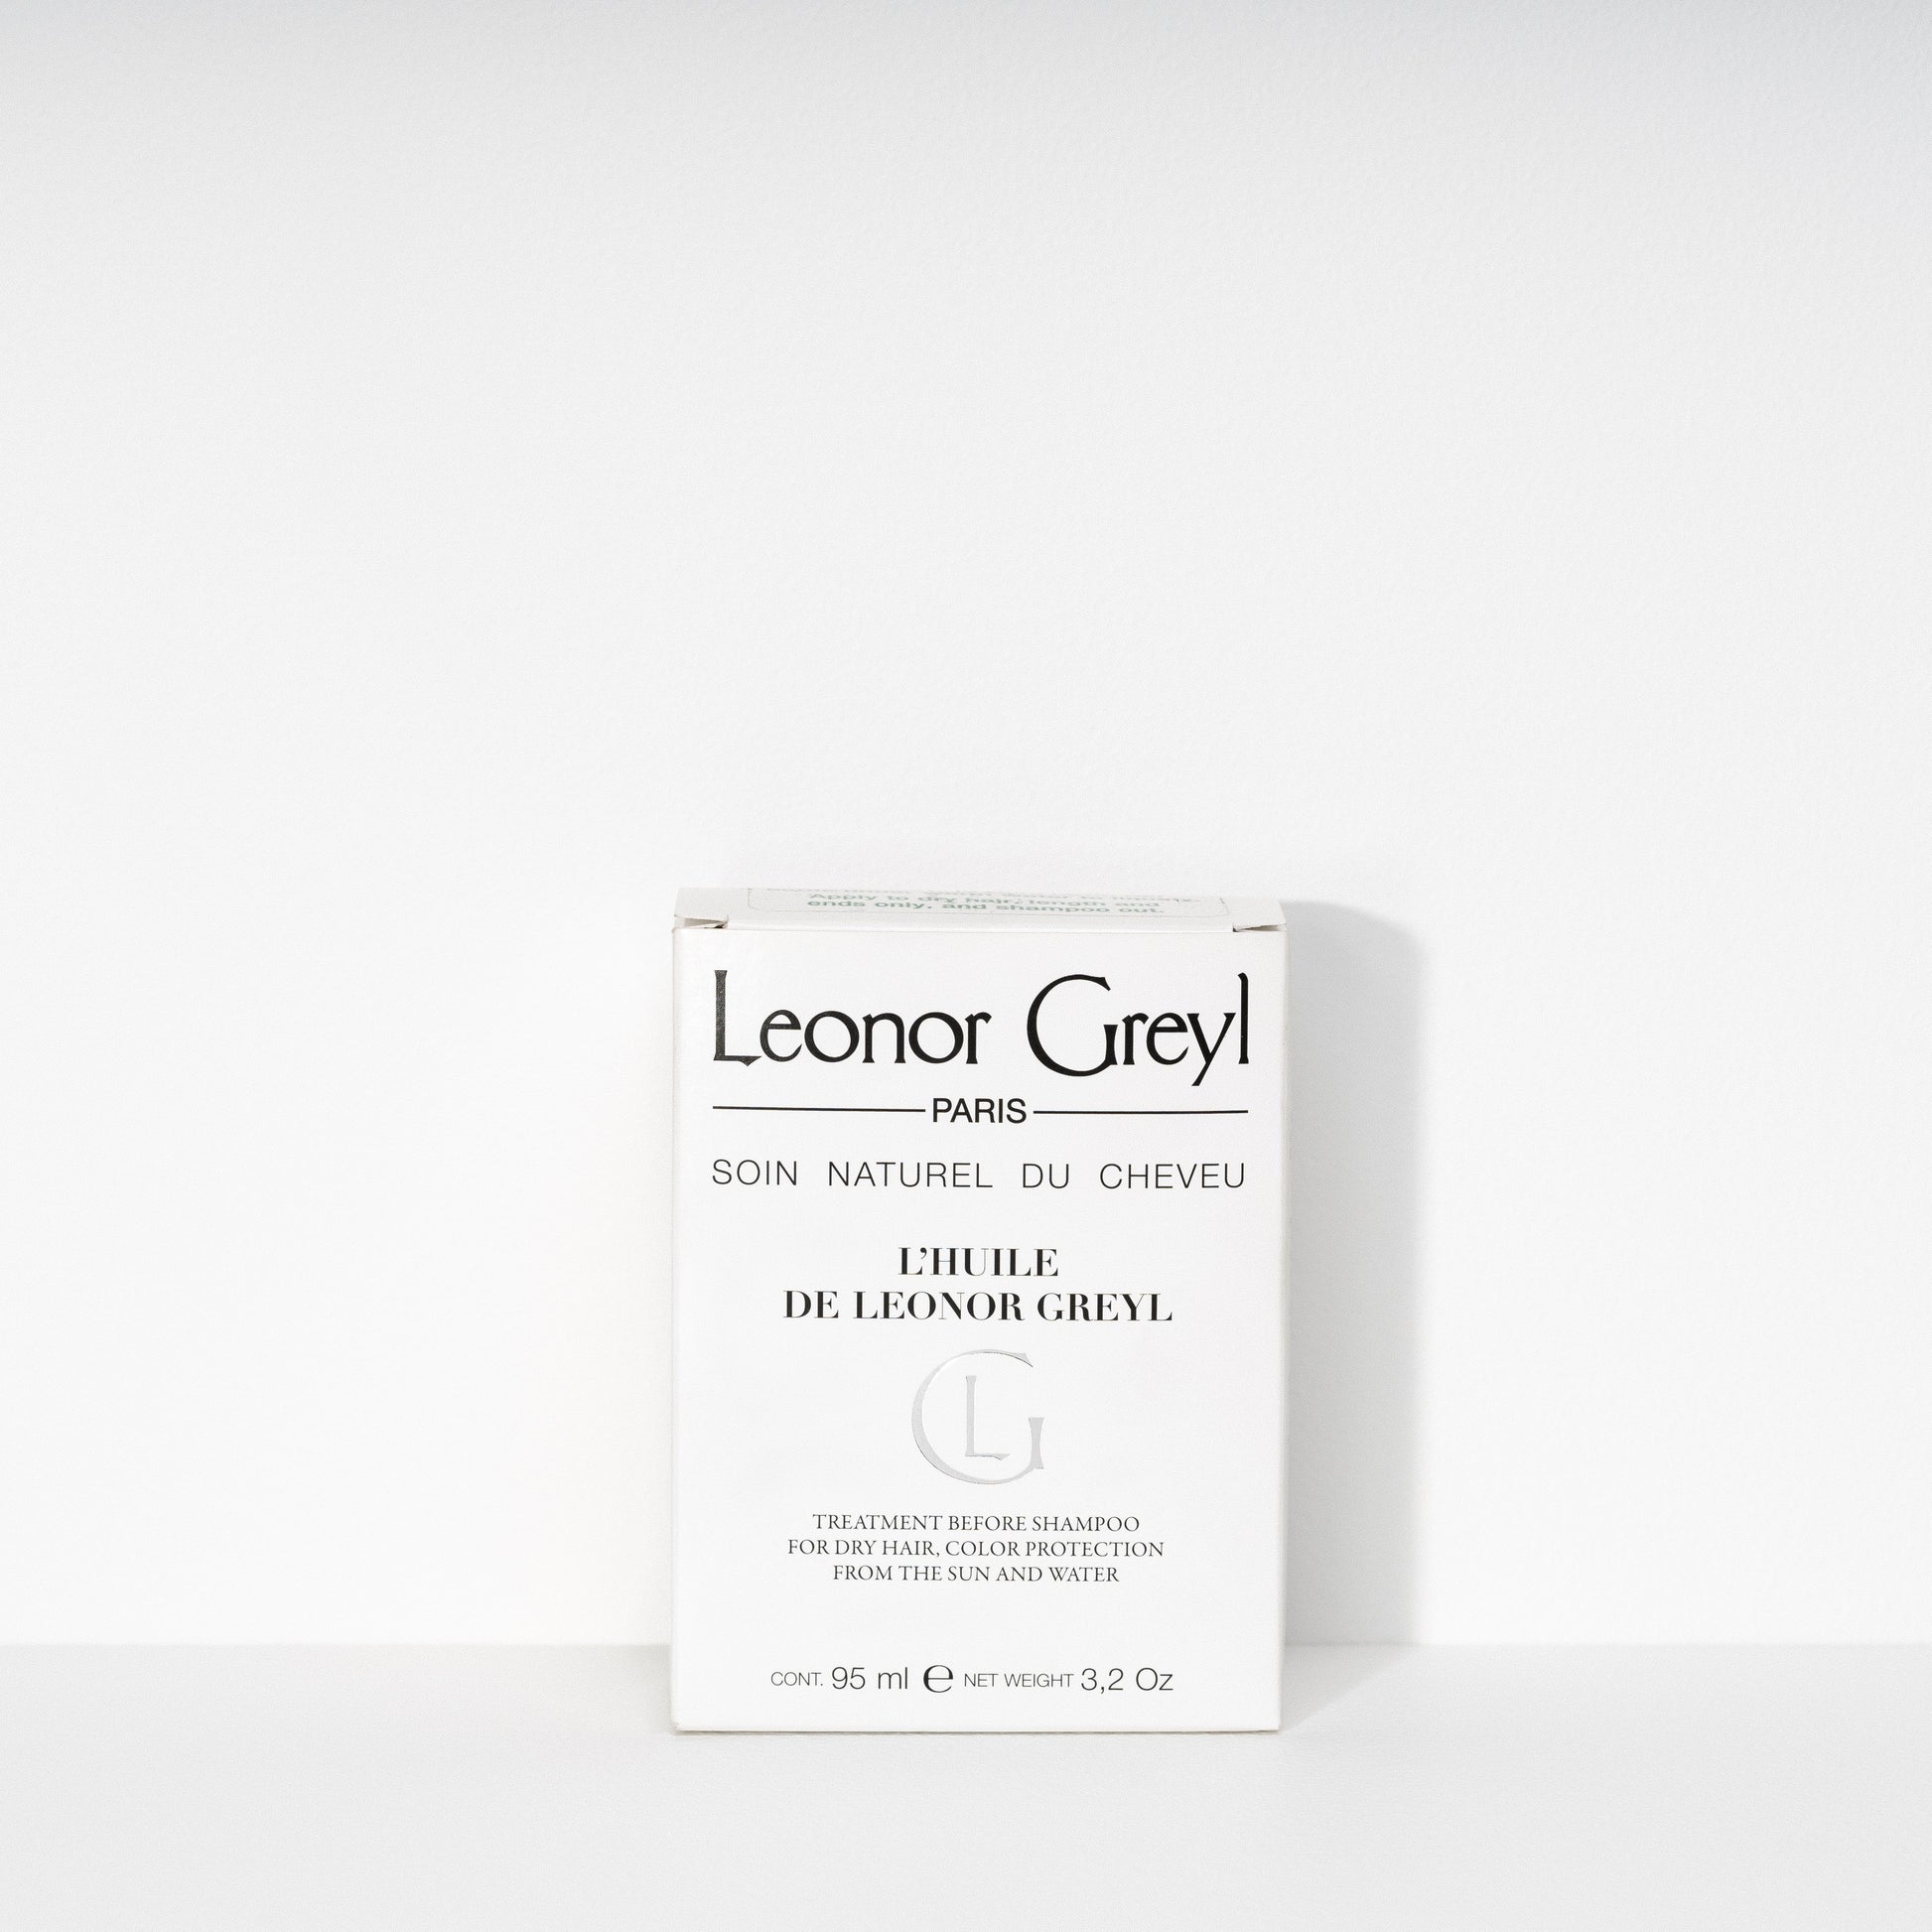 LEONOR GREYL HAIR CARE TREATMENTS L'huile De Leonor Greyl